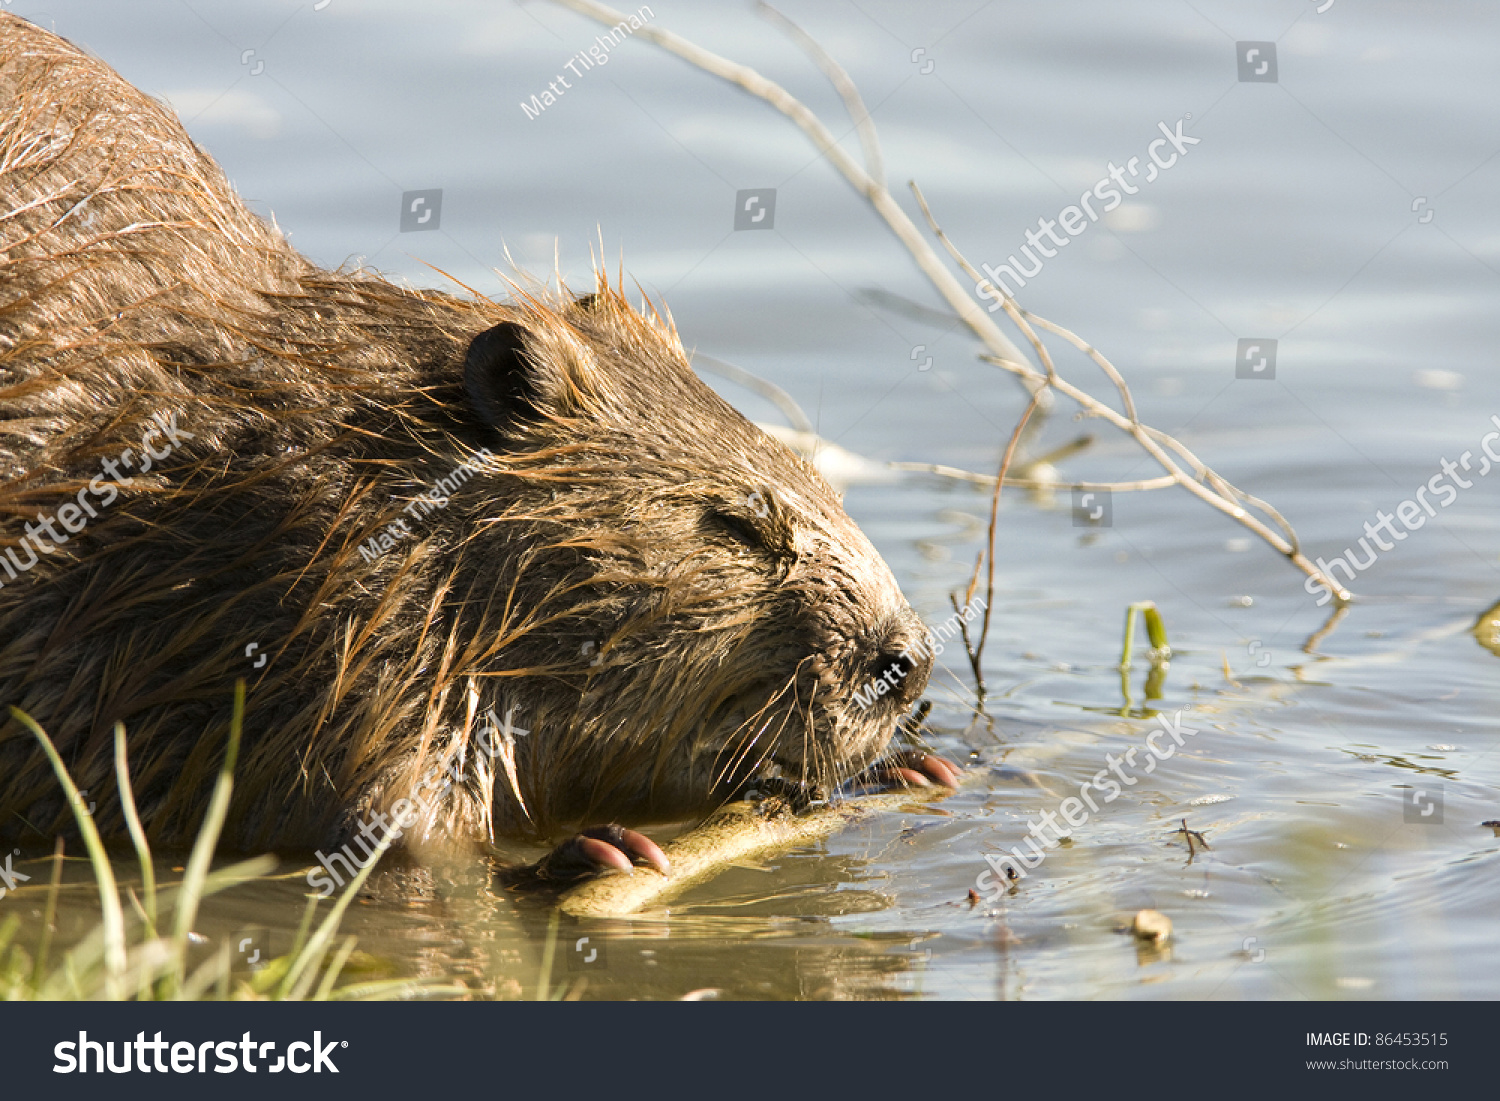 Shaky Beavers